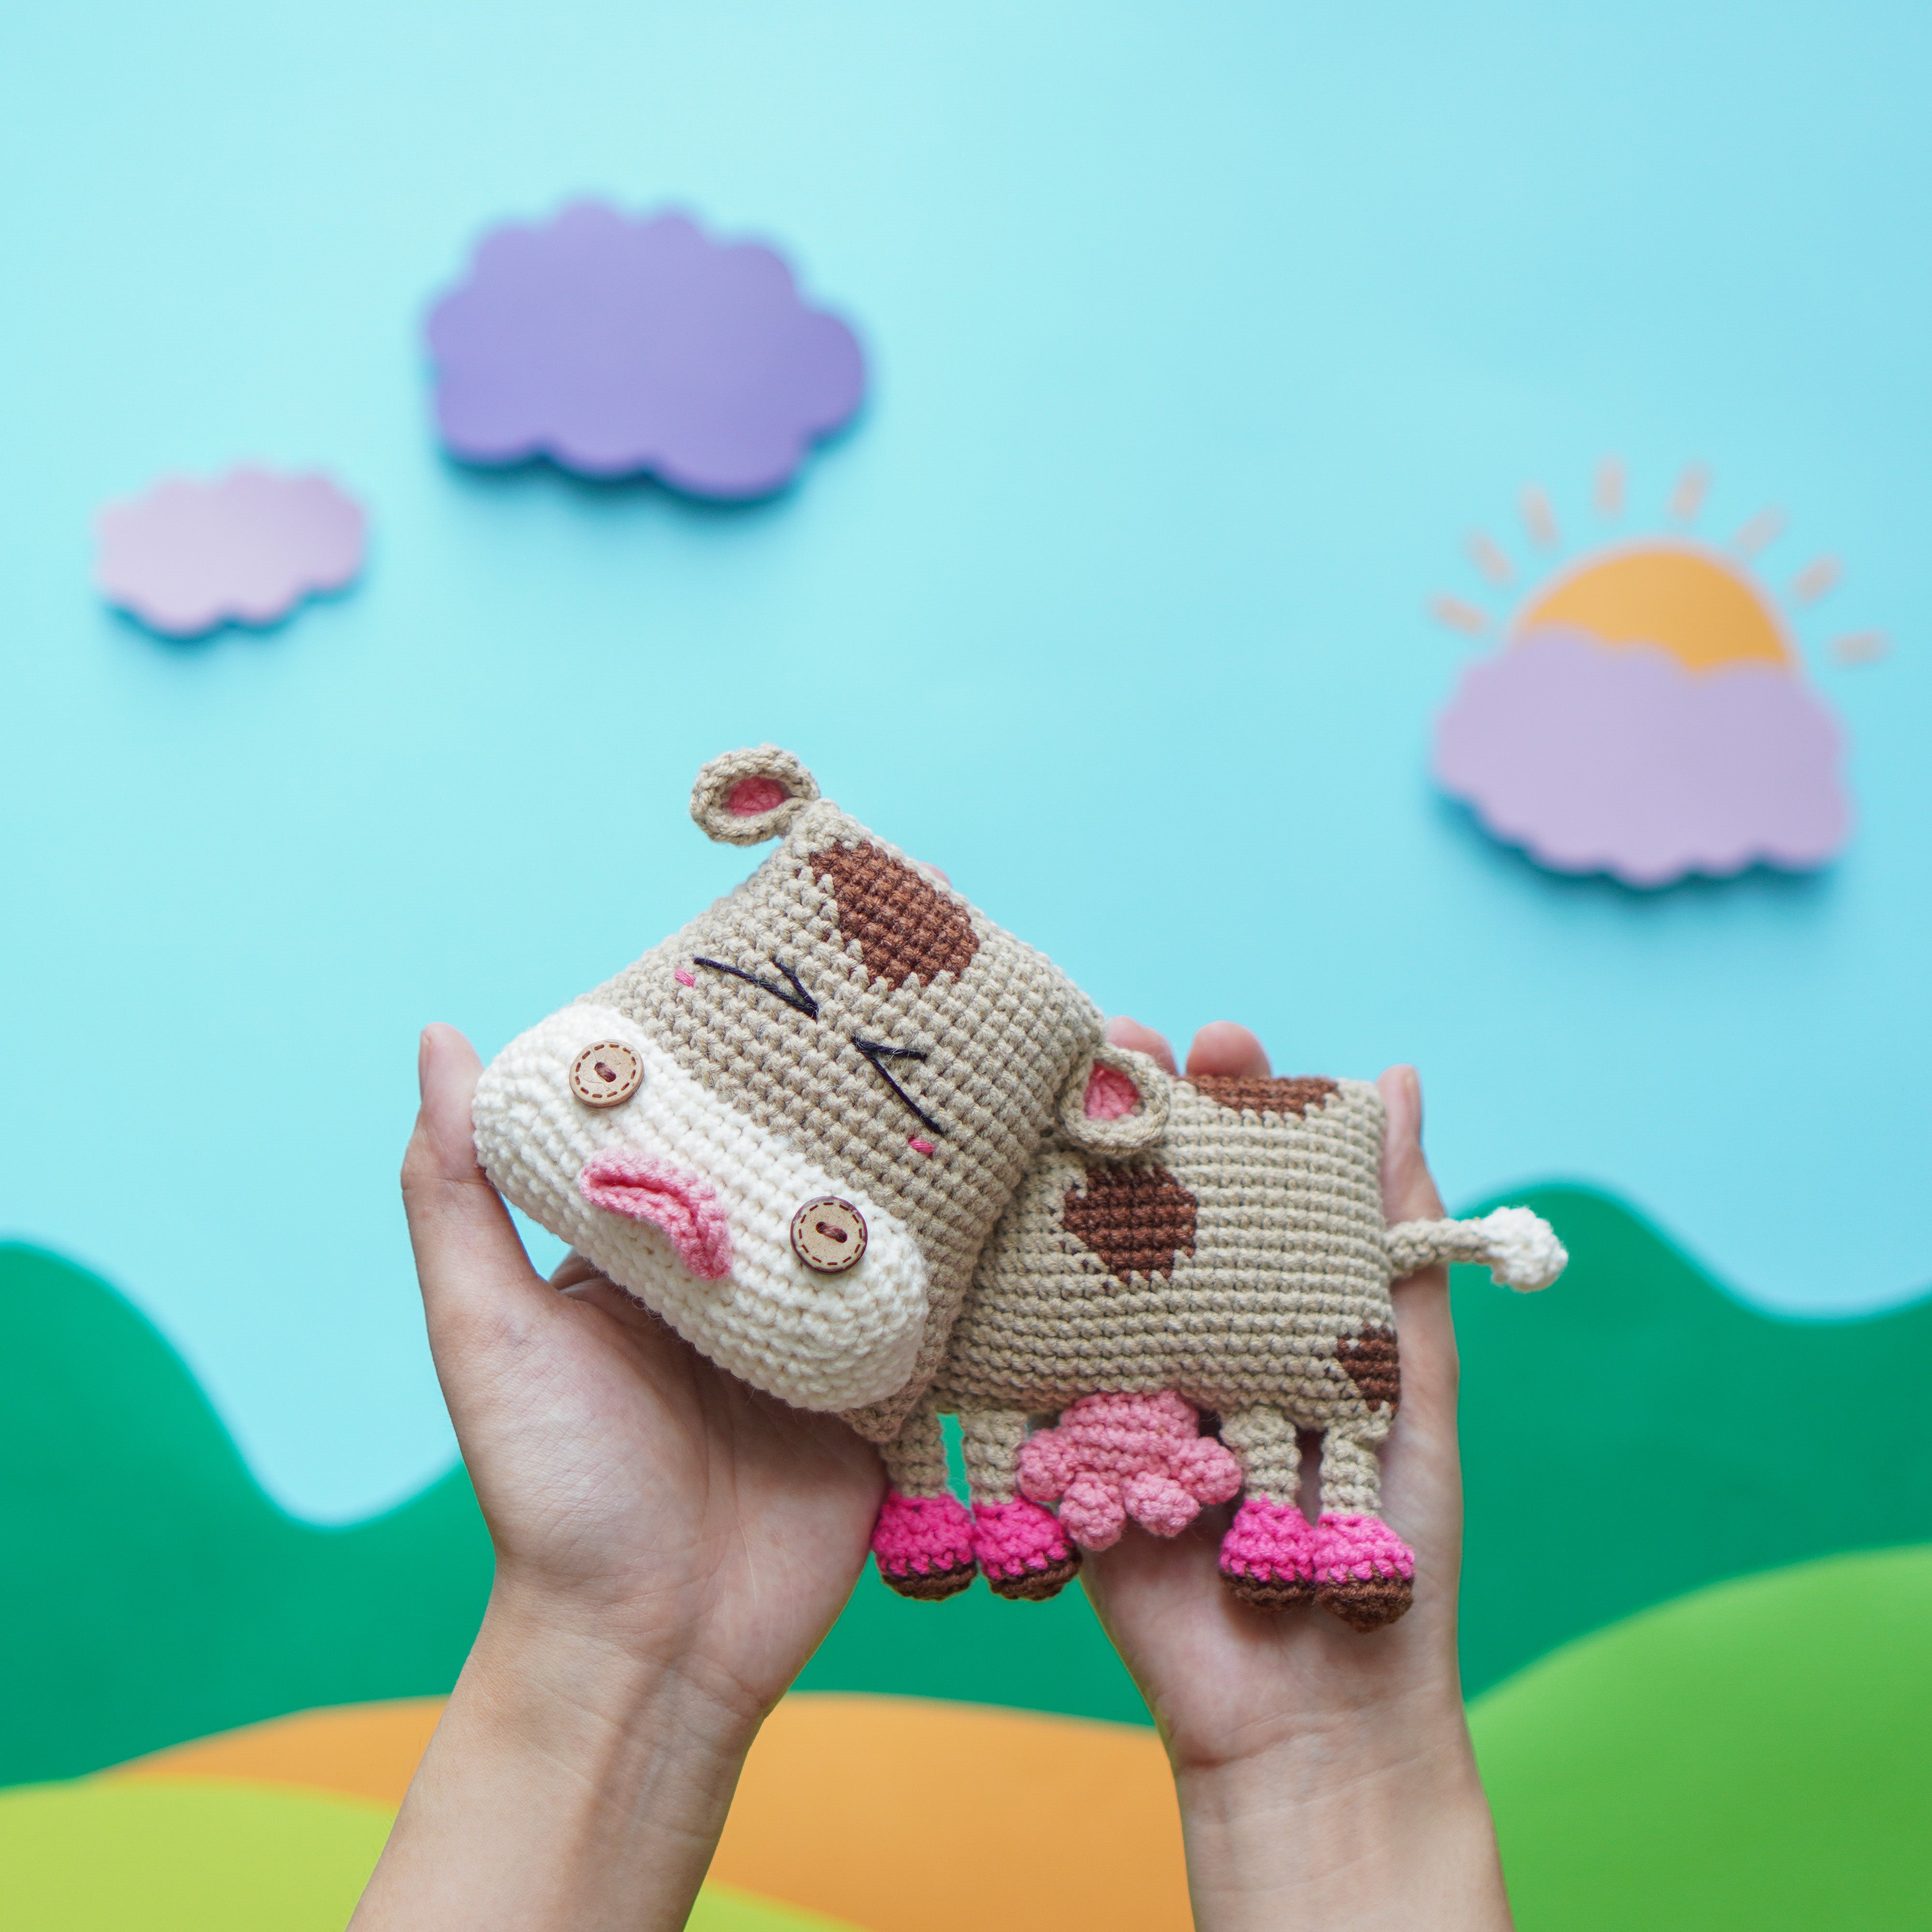 Flat Cows: Calf & Mommy Cow Crochet Pattern by Aquariwool Crochet (Crochet Doll Pattern/Amigurumi Pattern for Baby gift)